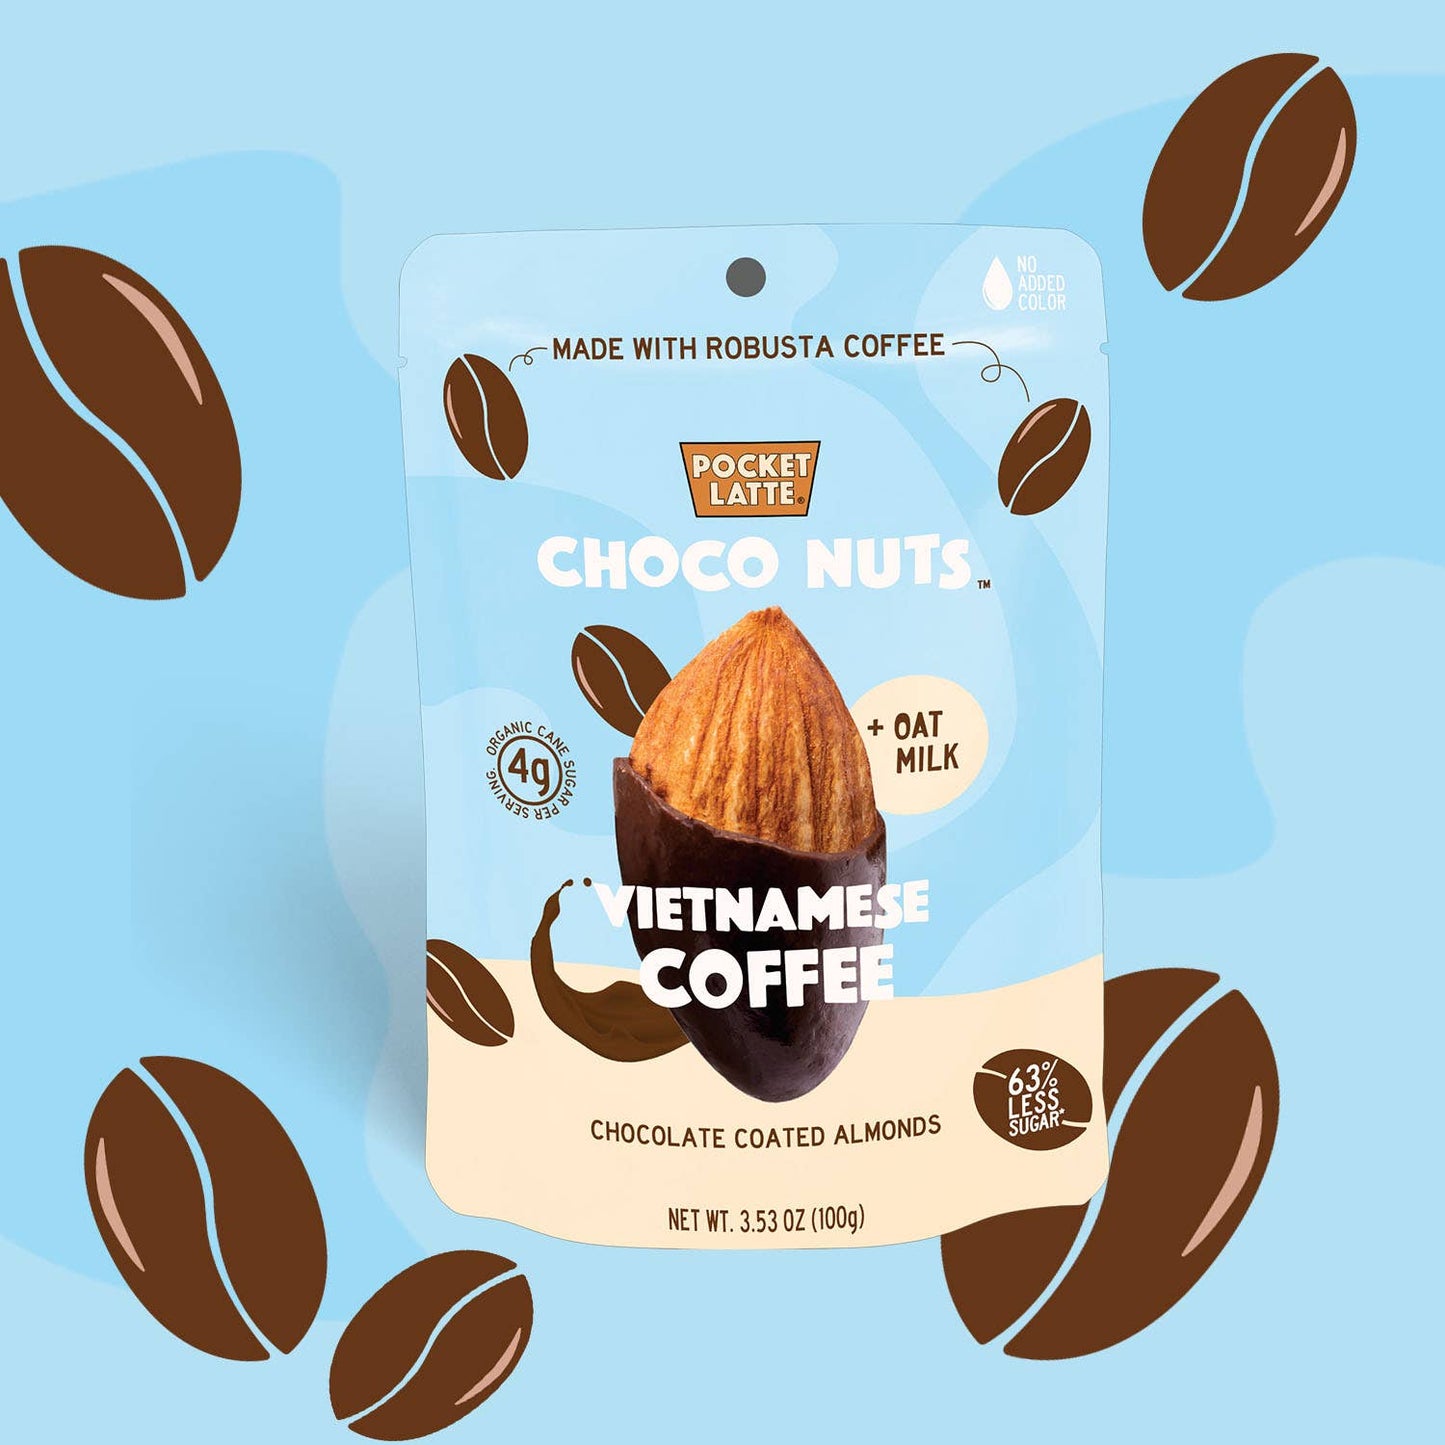 Pocket Latte - Vietnamese Coffee Choco Nuts